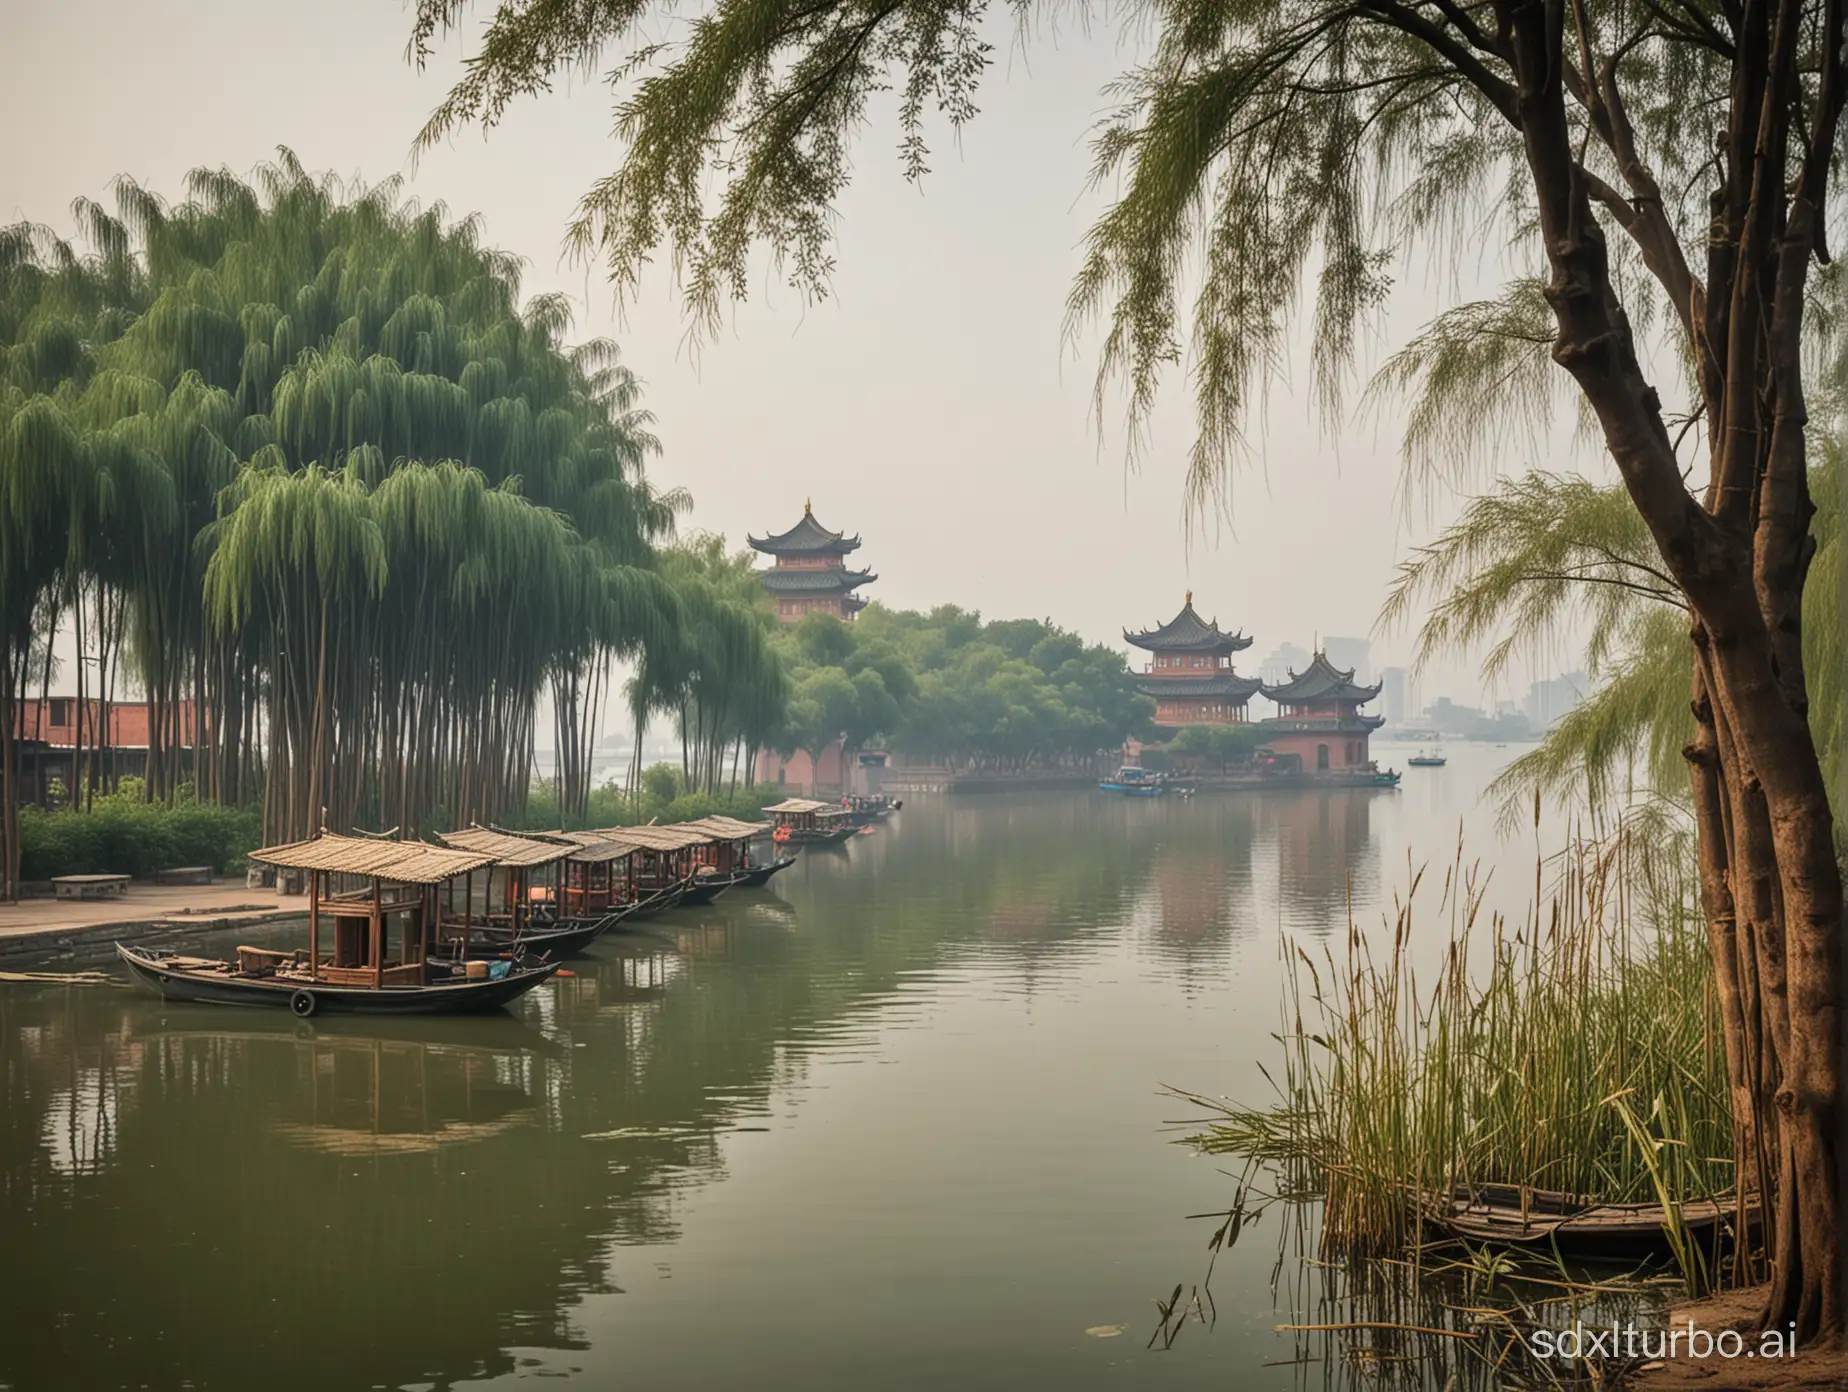 Scenic-Yueyang-Tower-and-Boats-on-Tranquil-Dongting-Lake-in-Hunan-China